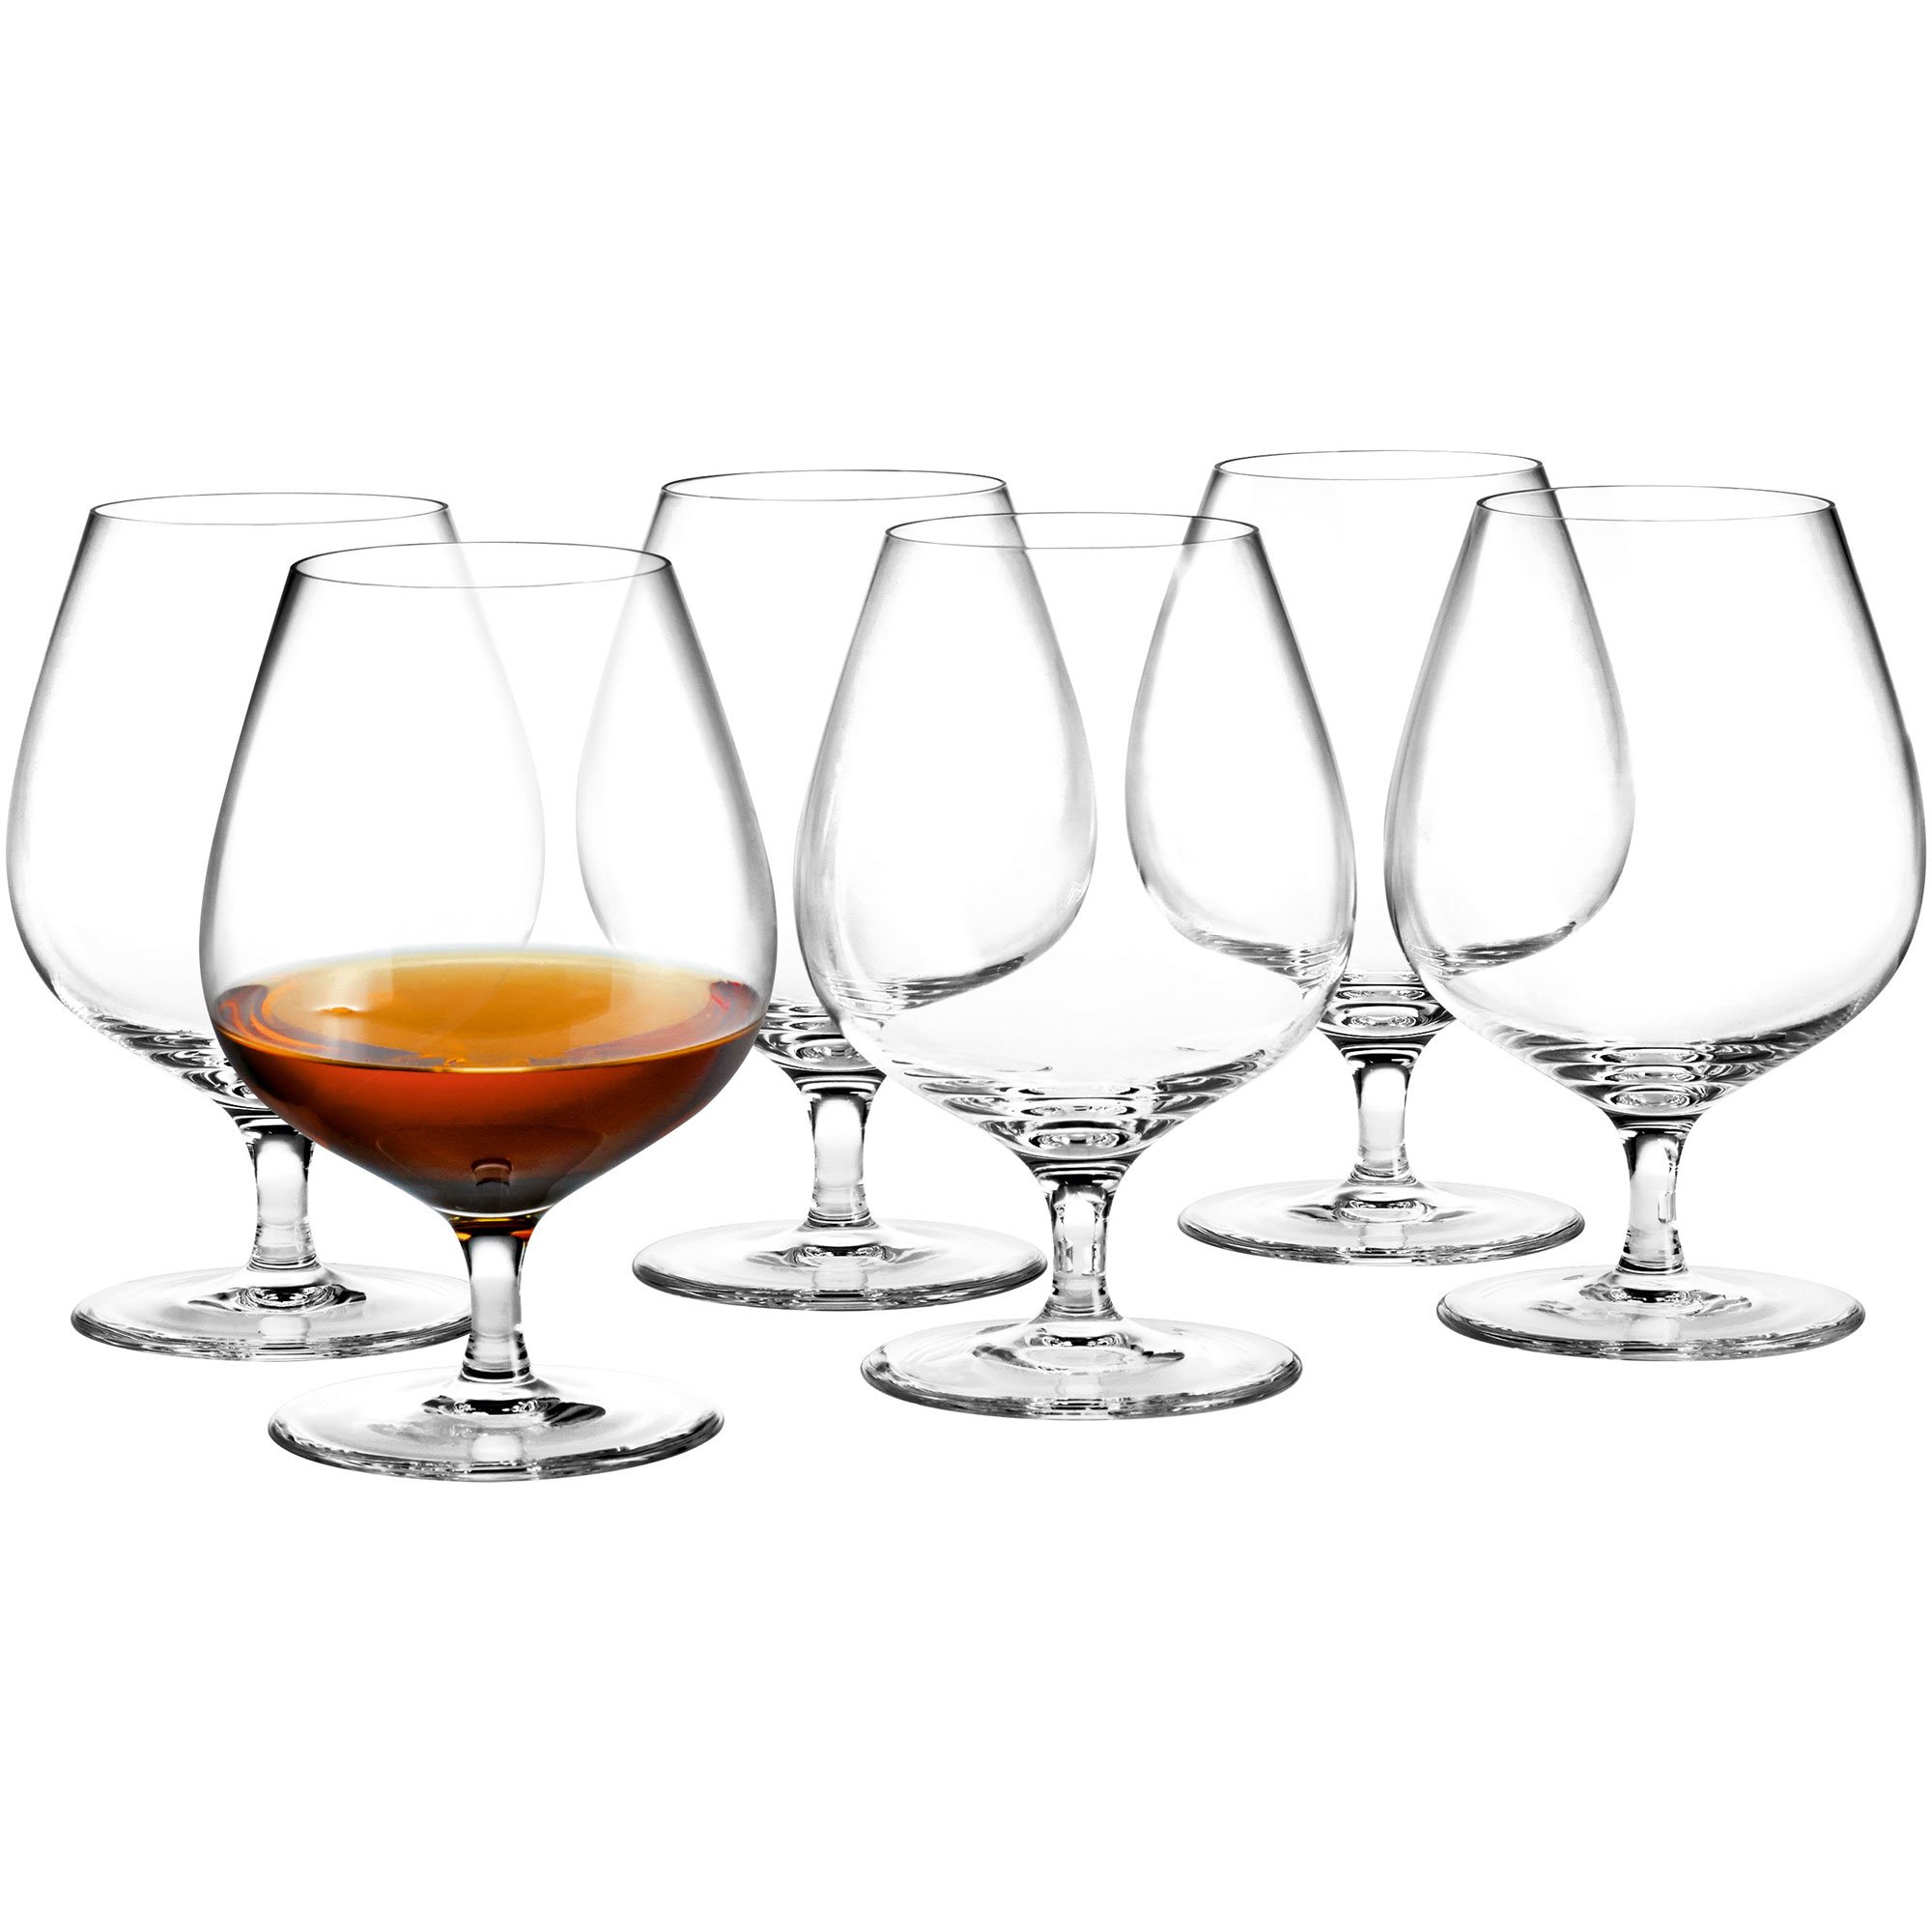 #1 på vores liste over cognacglas er Cognacglas